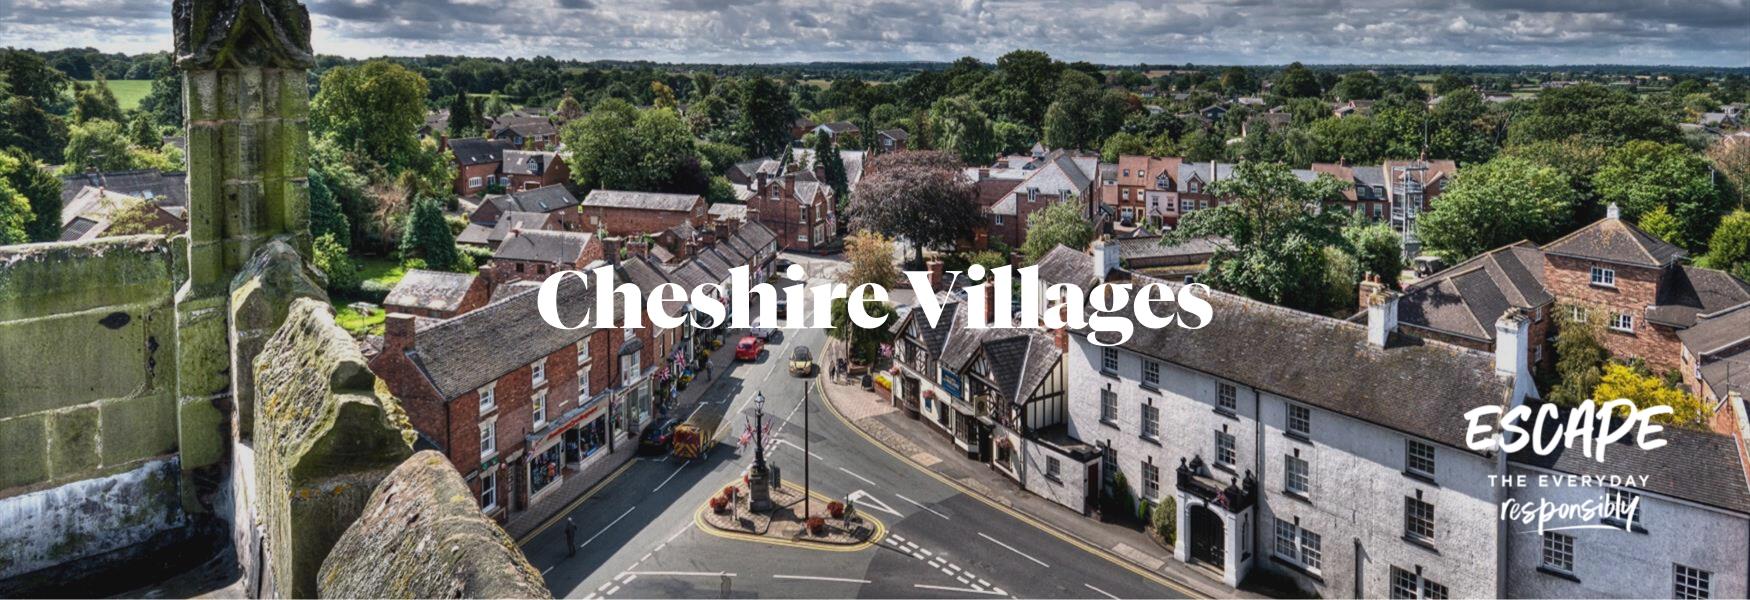 Cheshire Villages